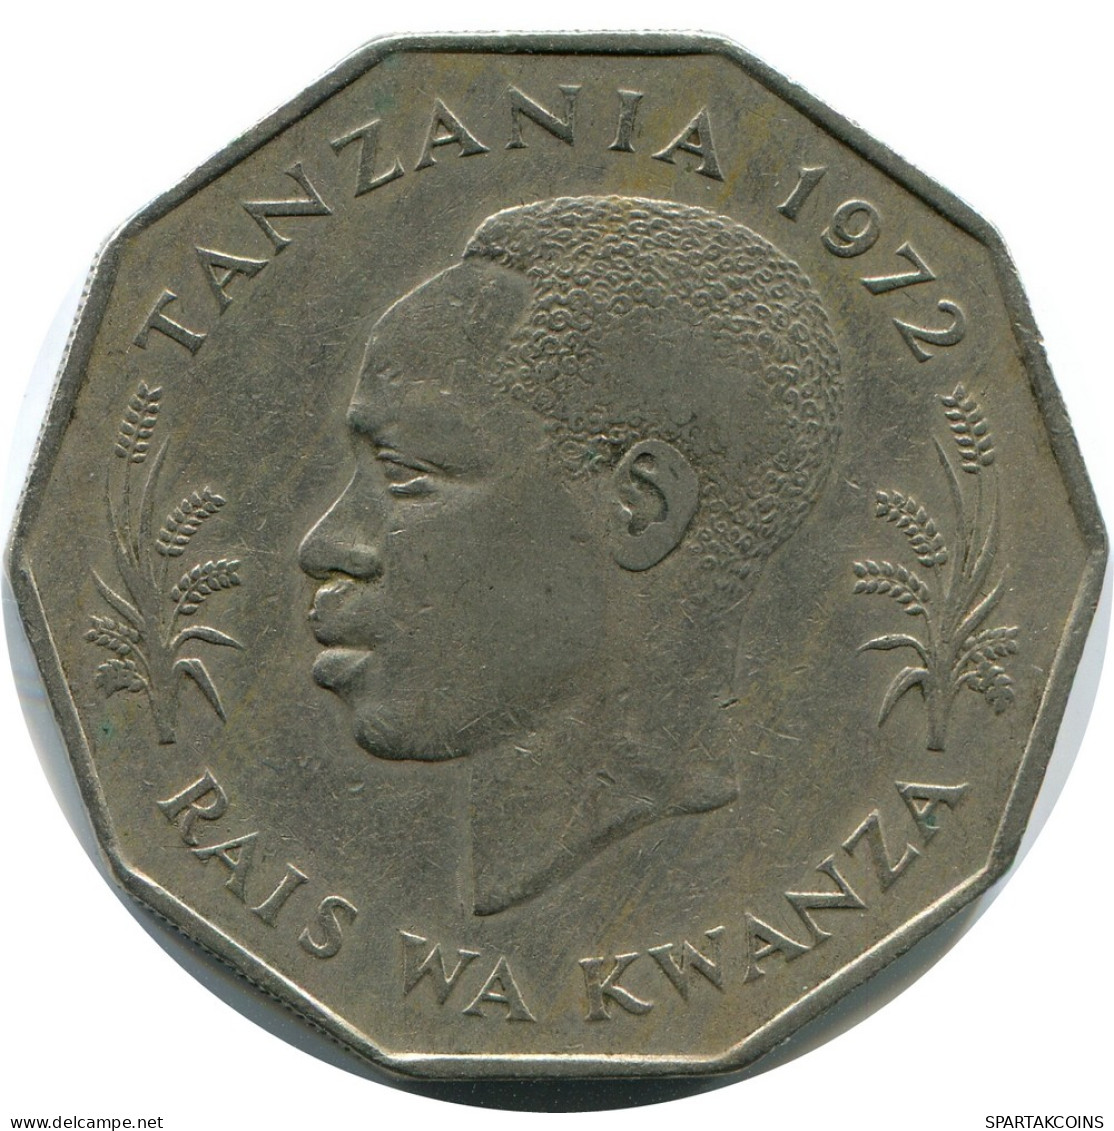 5 SHILINGI 1972 TANZANIA Coin #AZ085.U - Tanzanie